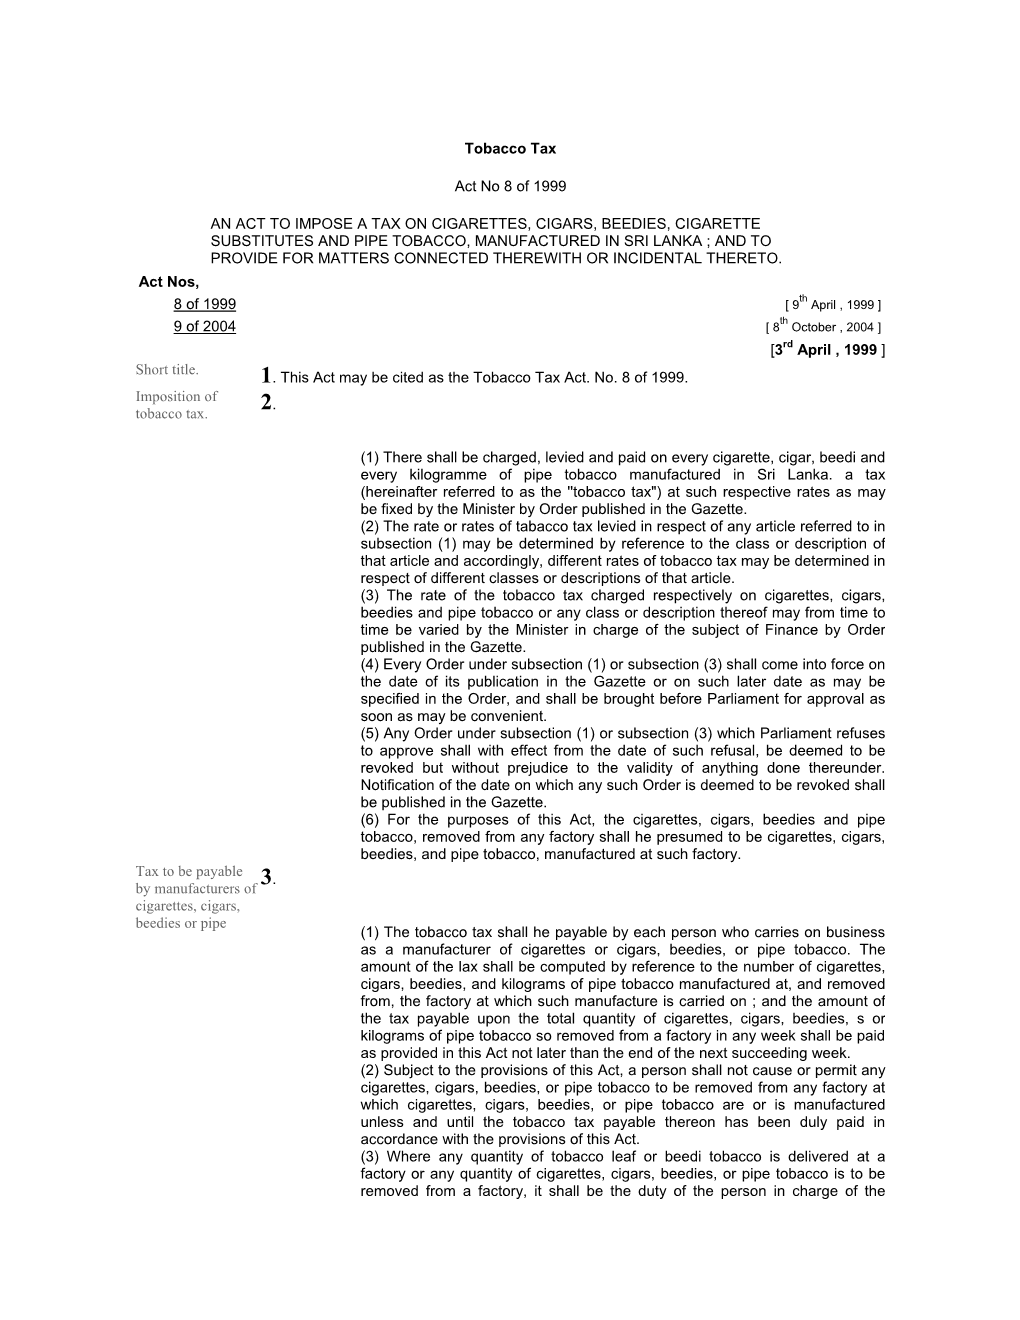 Sri Lanka – Tobacco Tax Act No. 8 of 1999